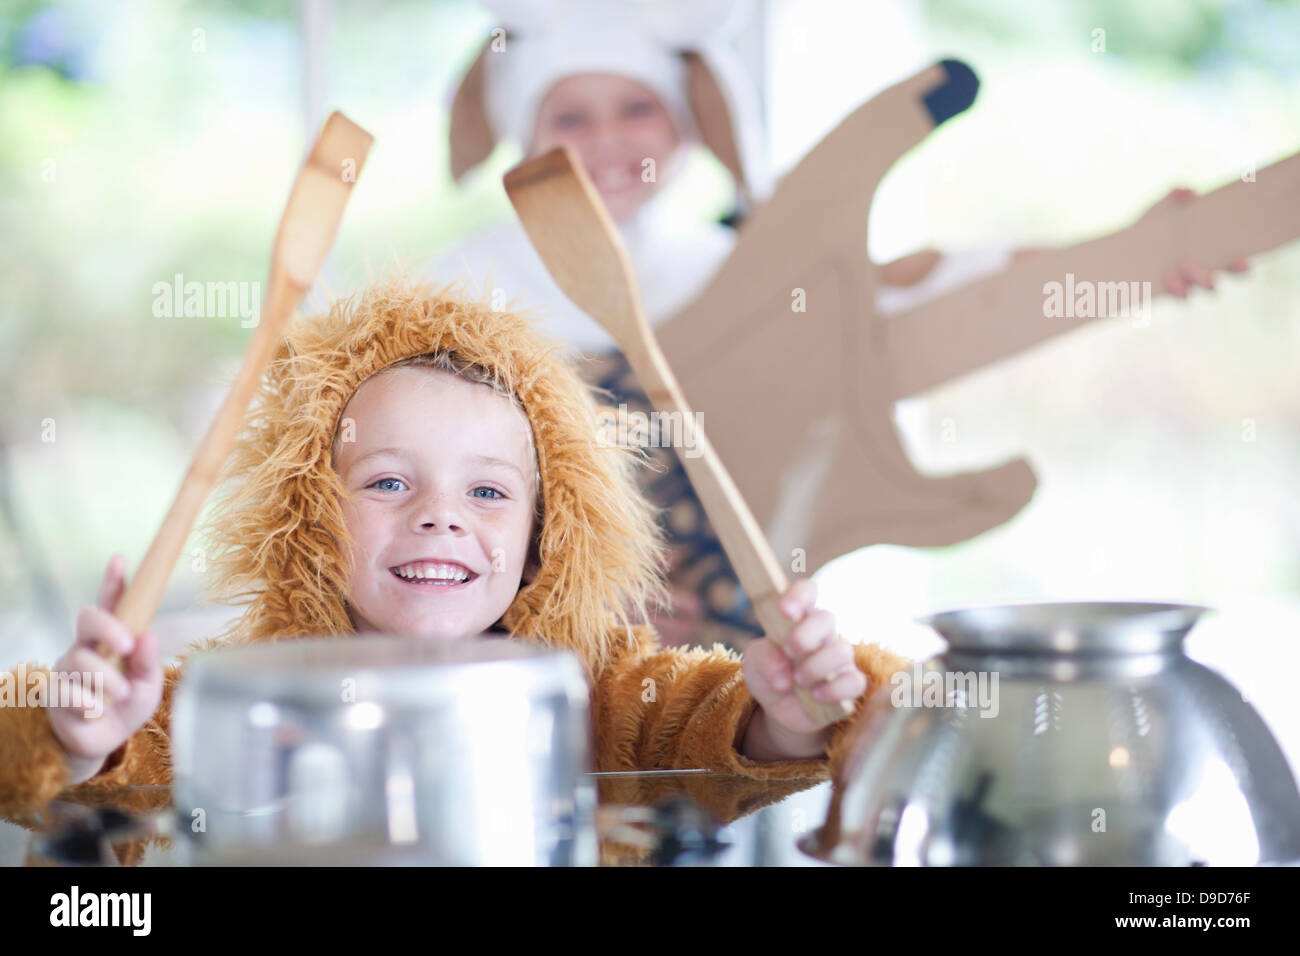 Children pretending to play music instruments Stock Photo